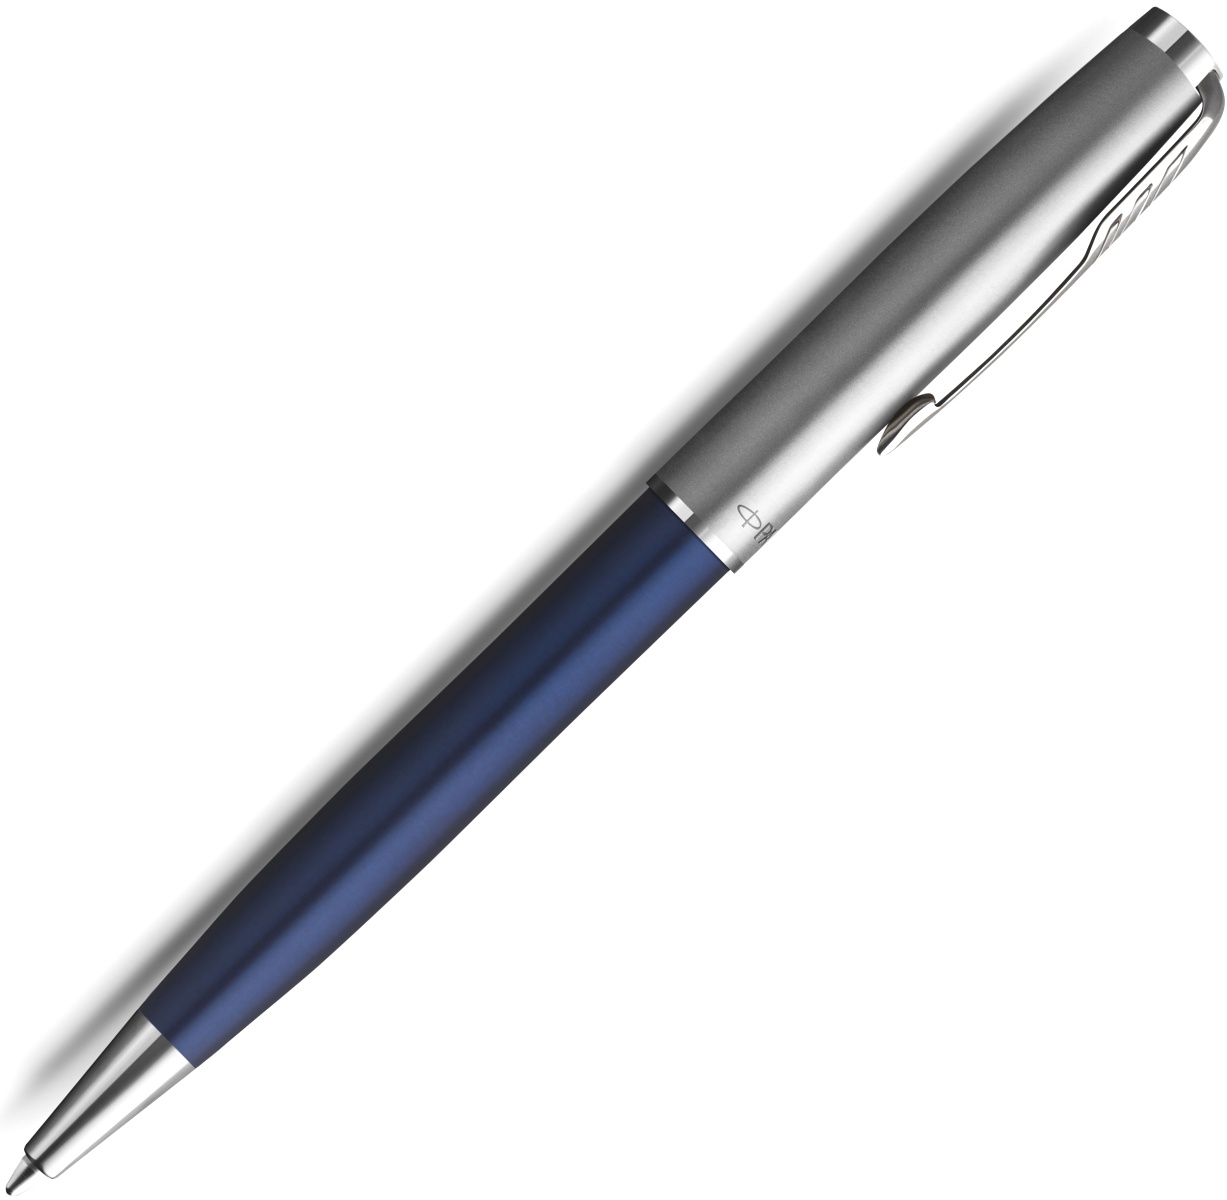  Ручка шариковая Parker Sonnet K546, Blue CT, фото 2